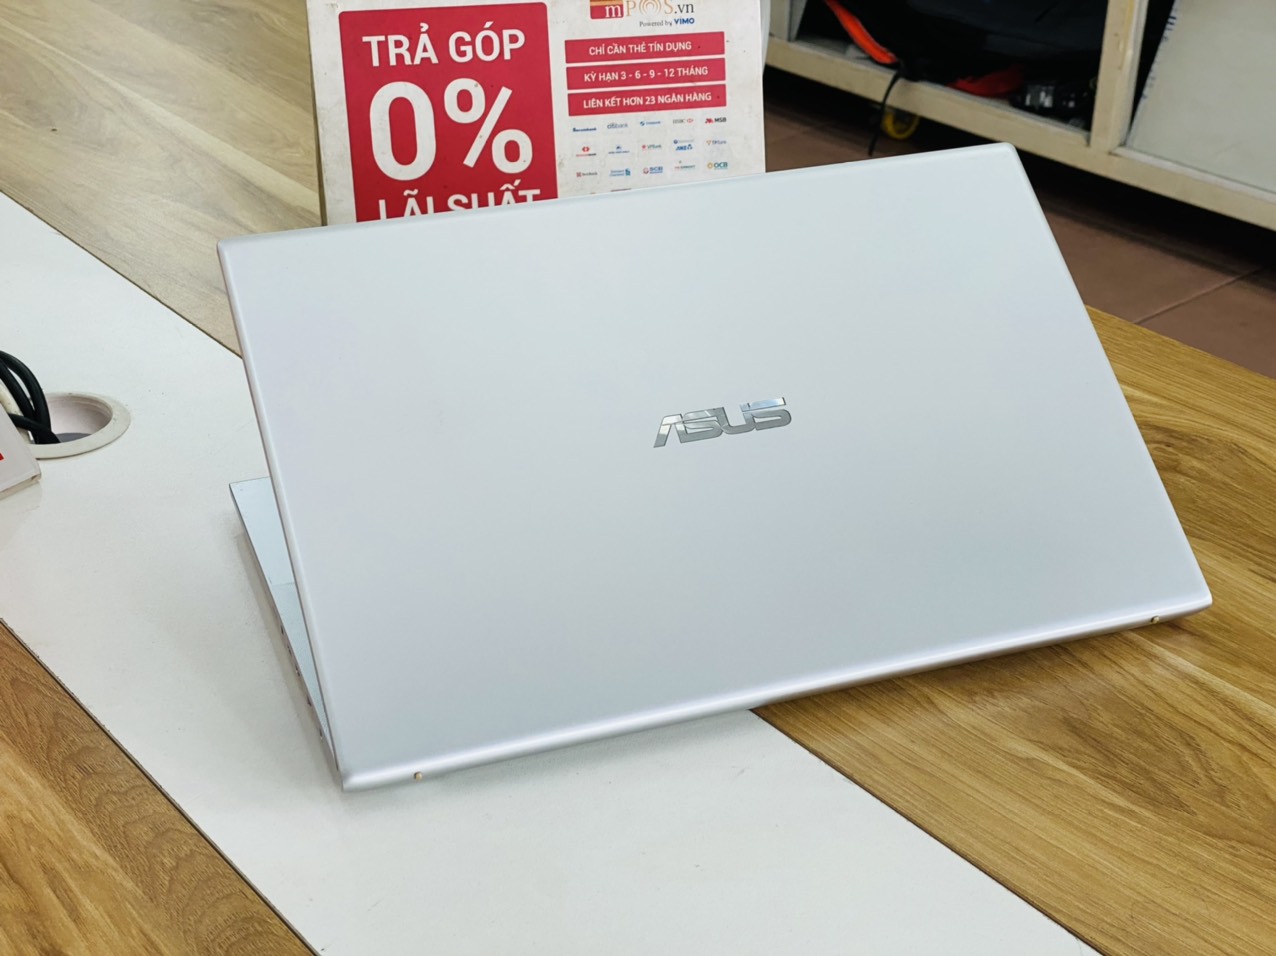 Asus Vivobook A512FA i3-8145U Ram 4G SSD 256G 15.6 inch Full HD (Đời 2020)